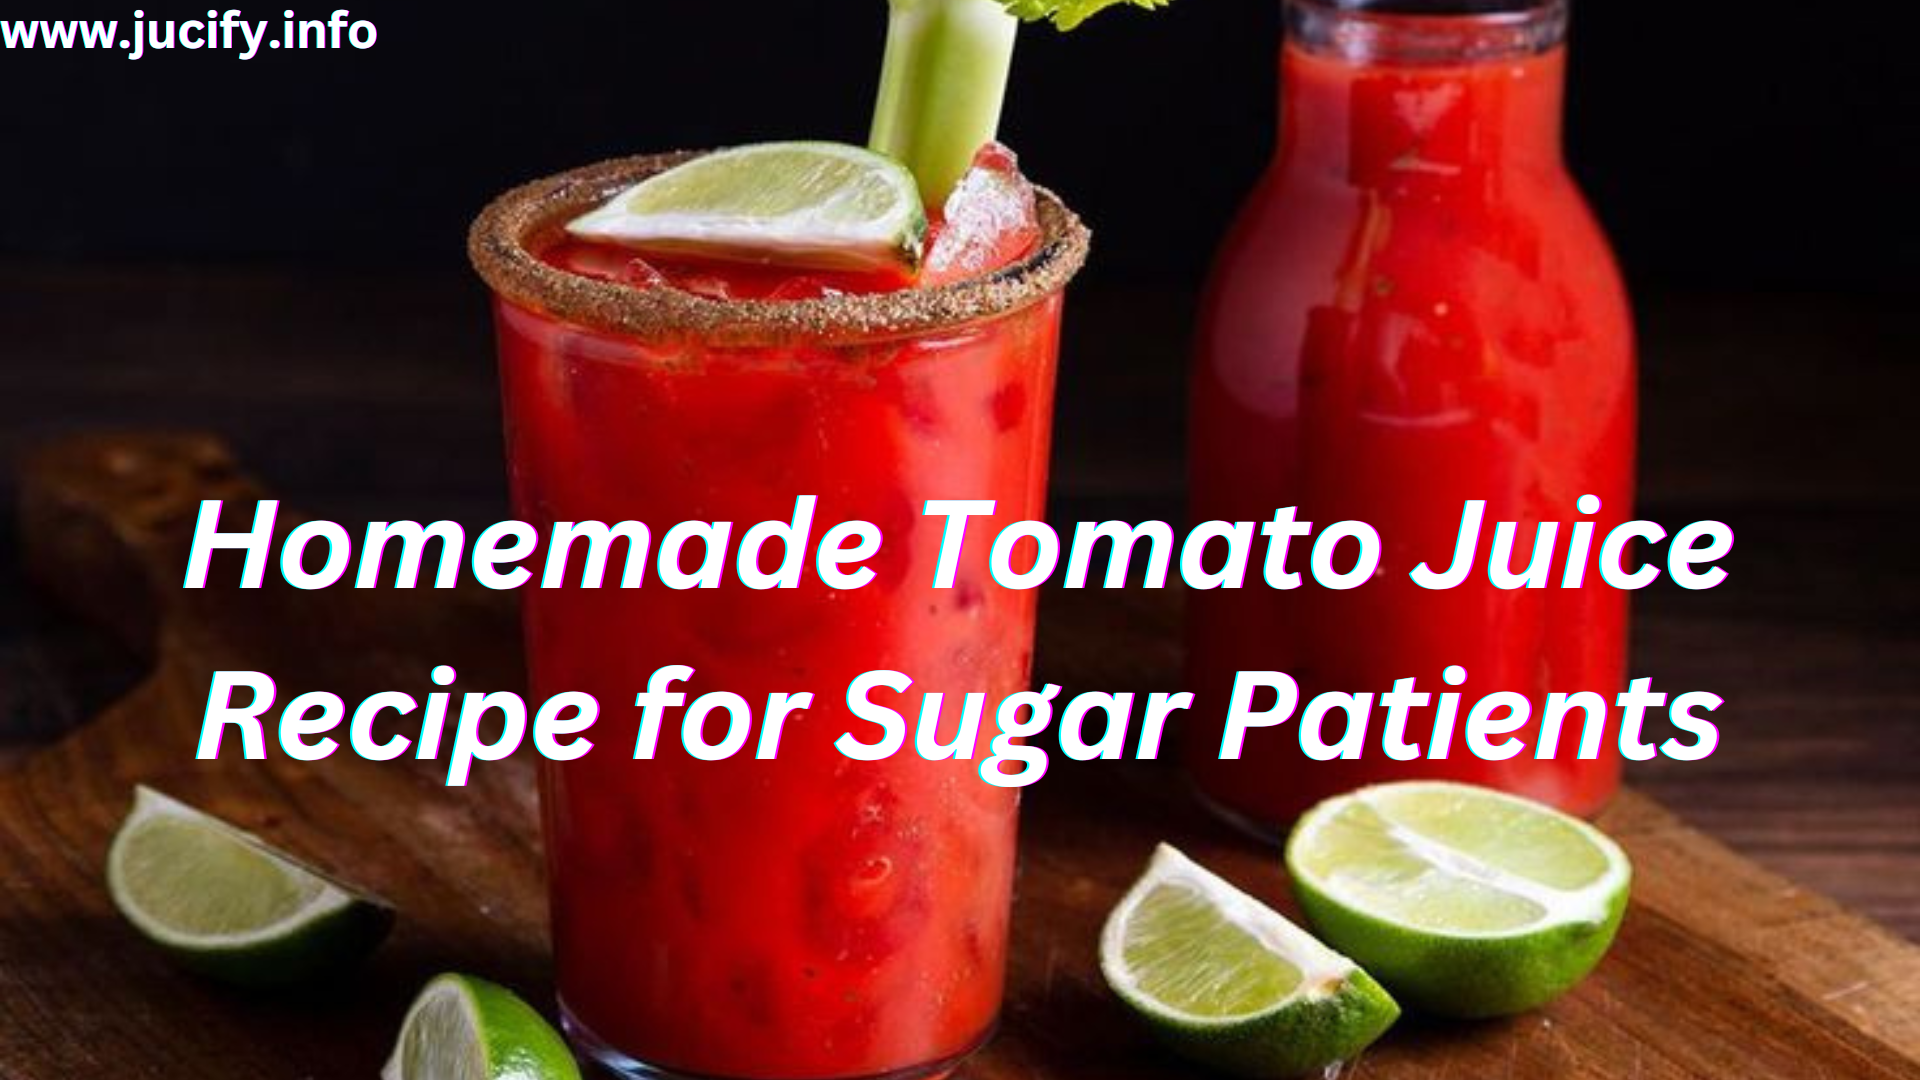 Homemade Tomato Juice Recipe for Sugar Patients